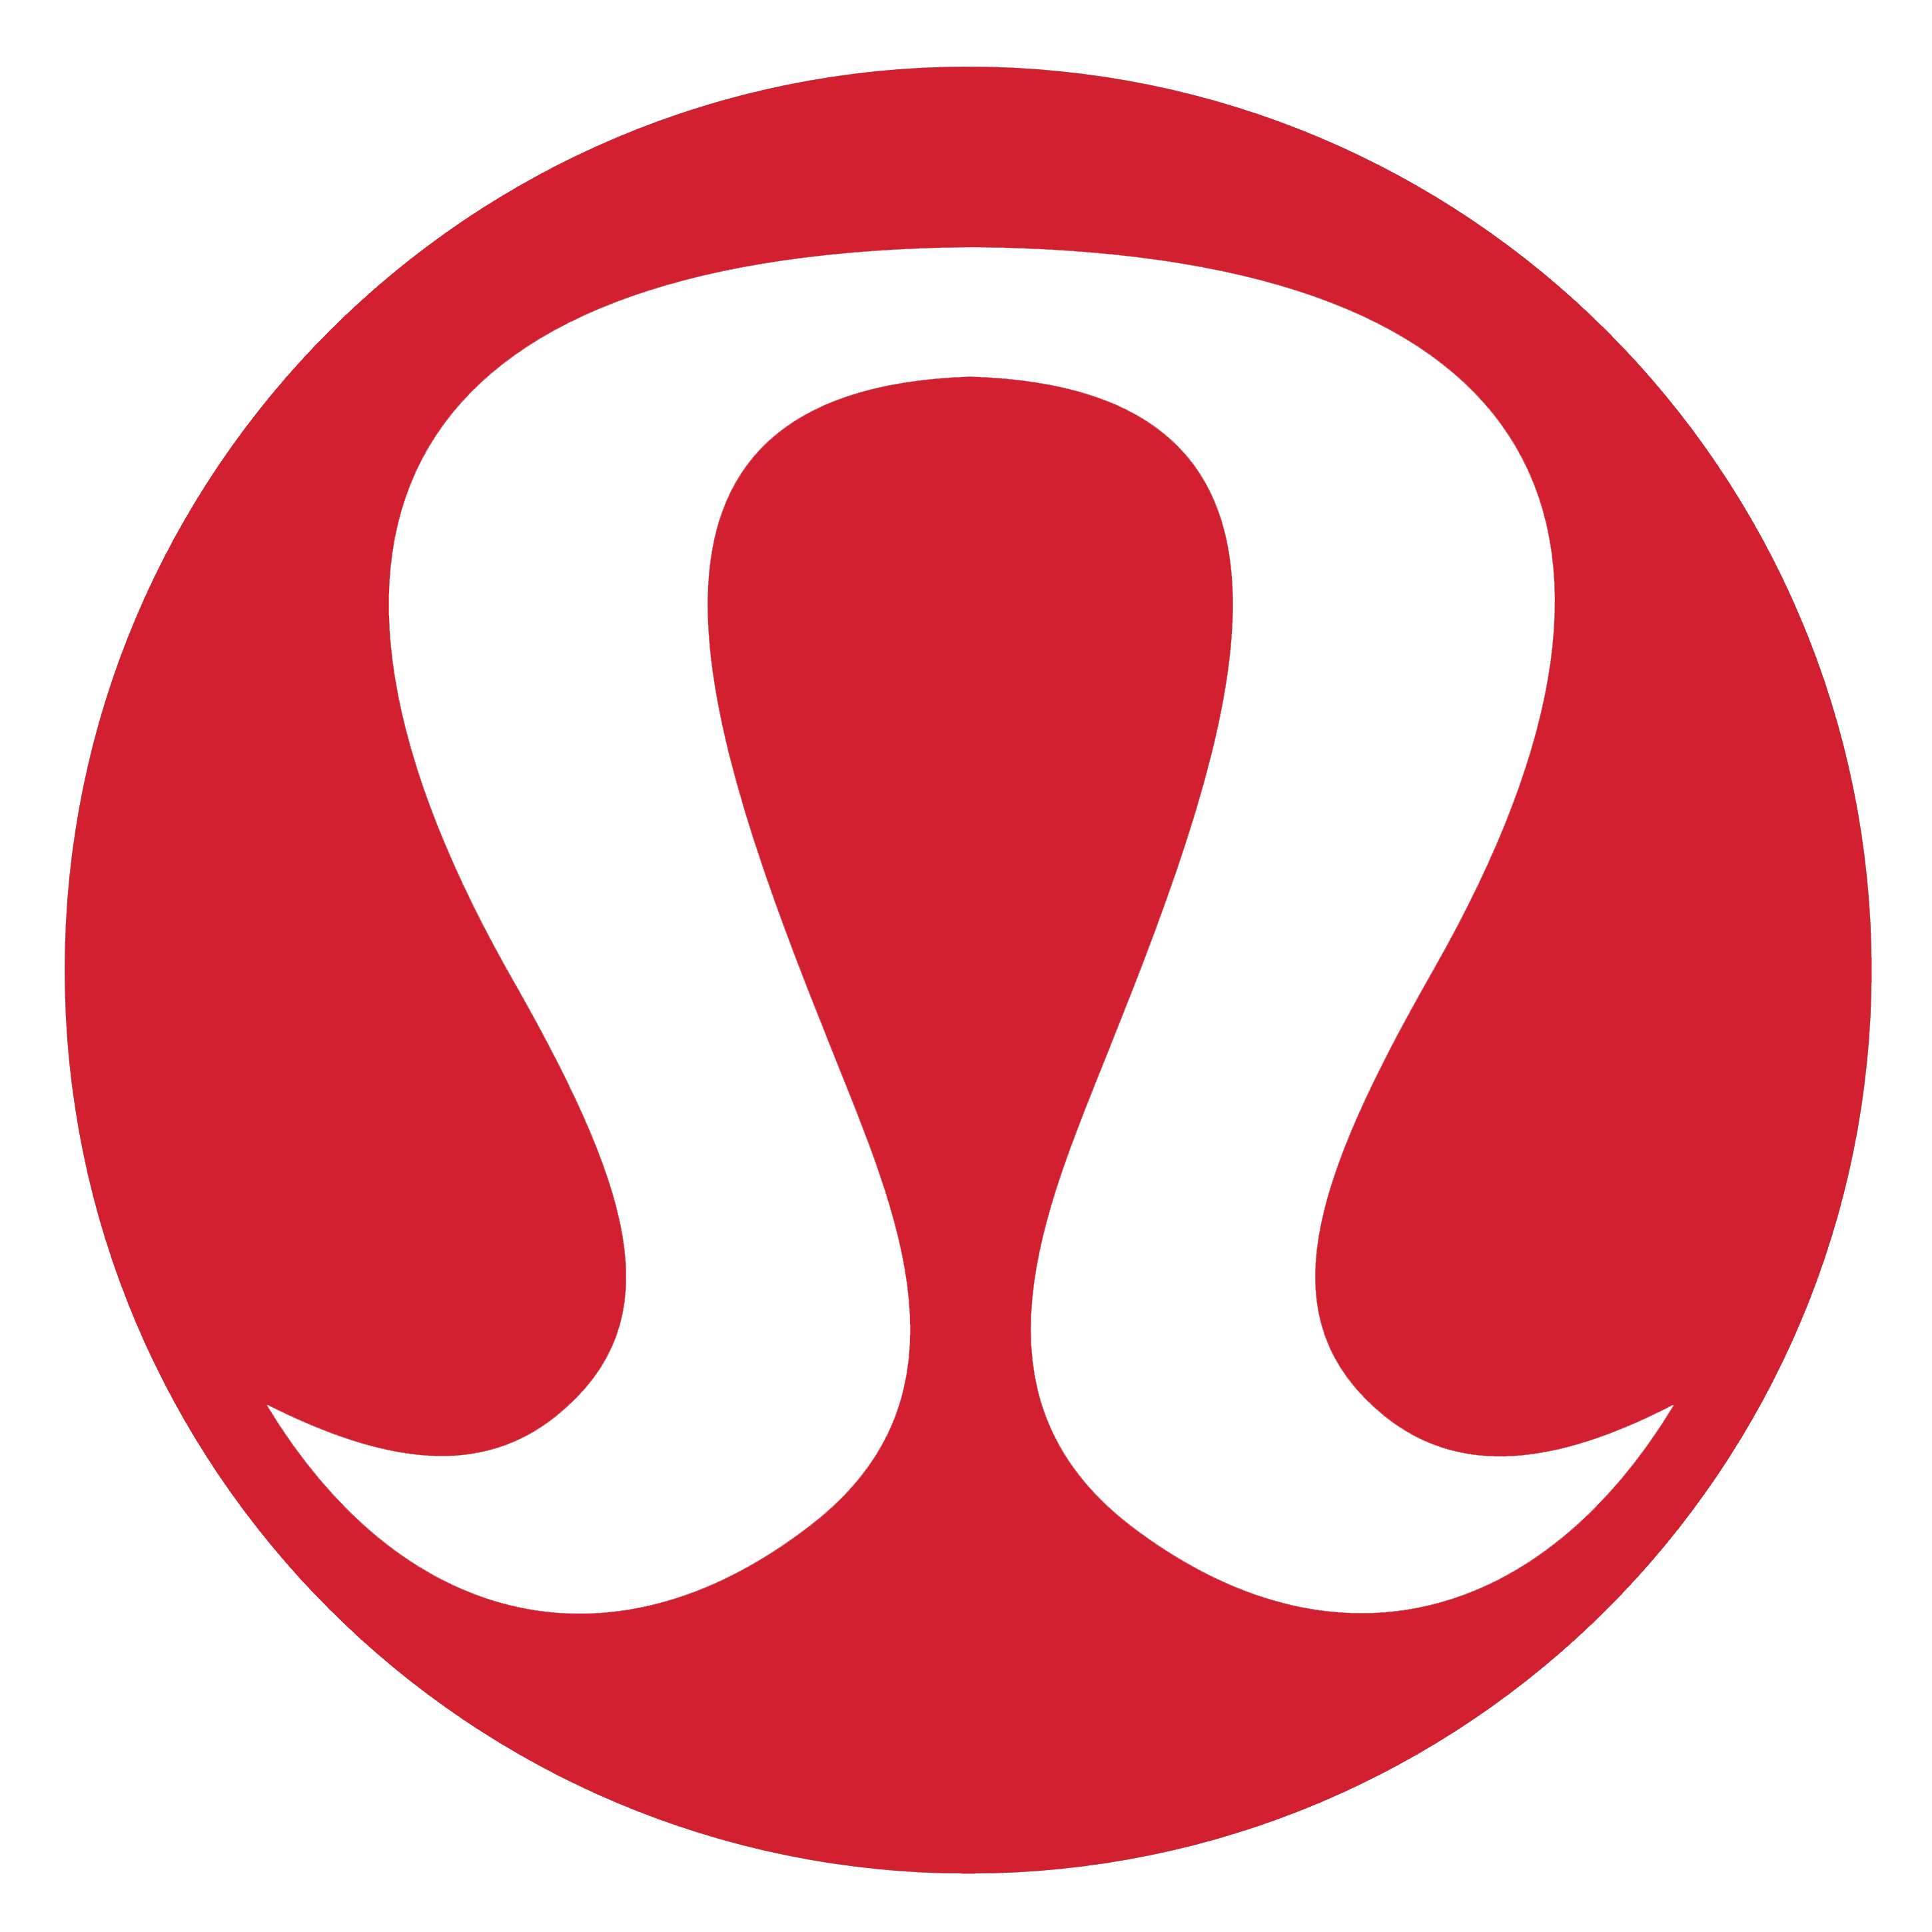 lululemon Logo